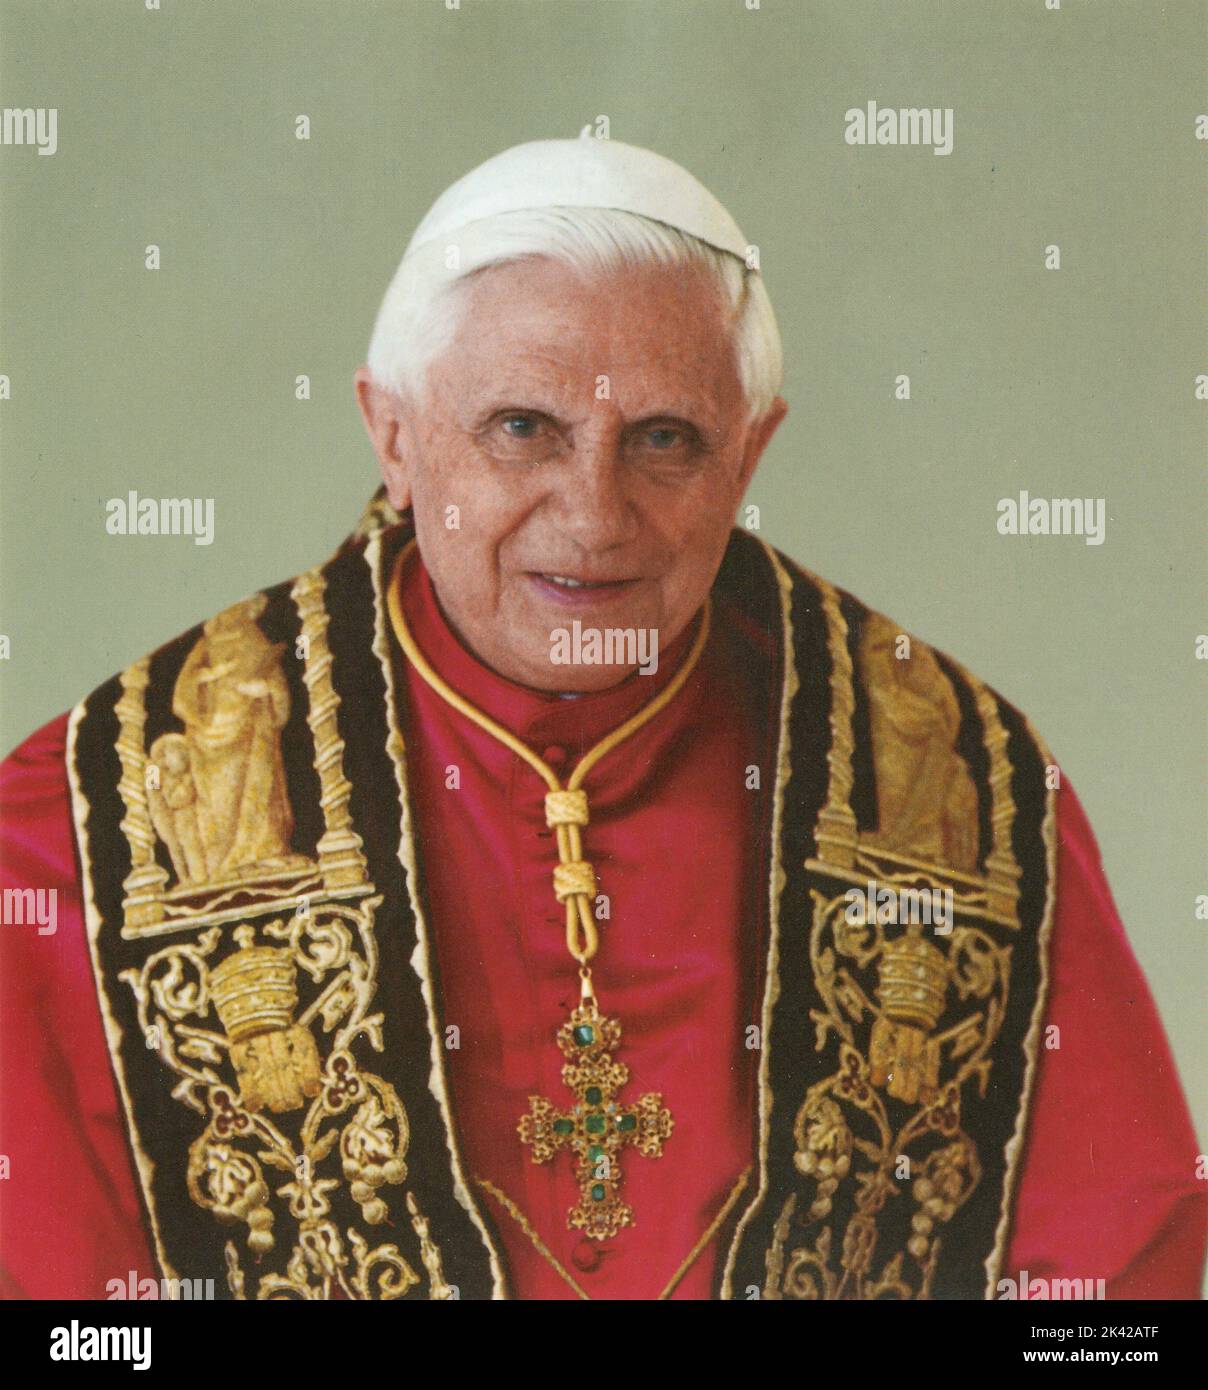 Pope Benedict XVI Joseph Aloisius Ratzinger, Vatican City 2005 Stock Photo